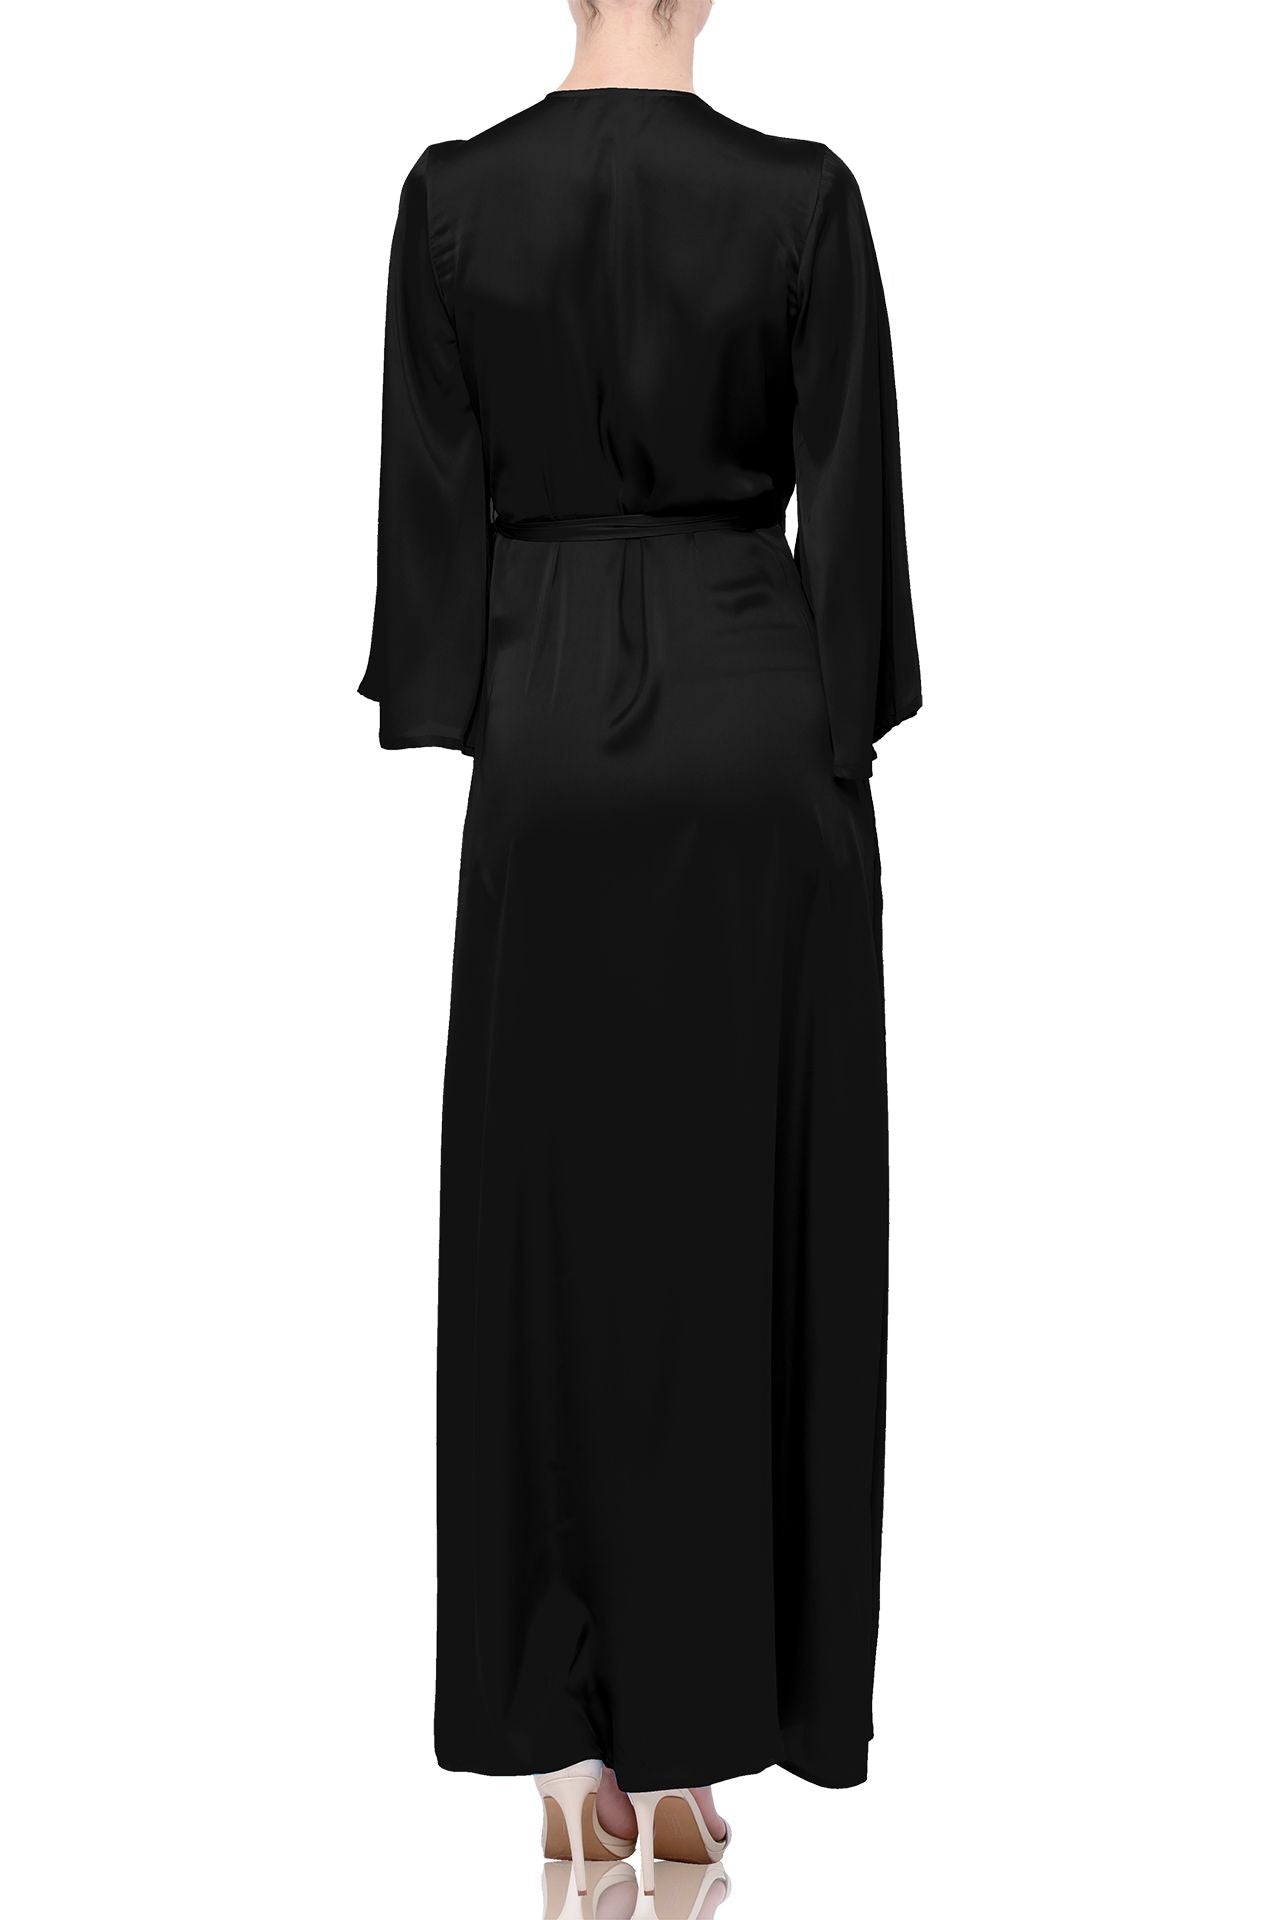 "long black wrap dress" "Kyle X Shahida" "wrap front maxi dress" "long sleeve dress wrap"